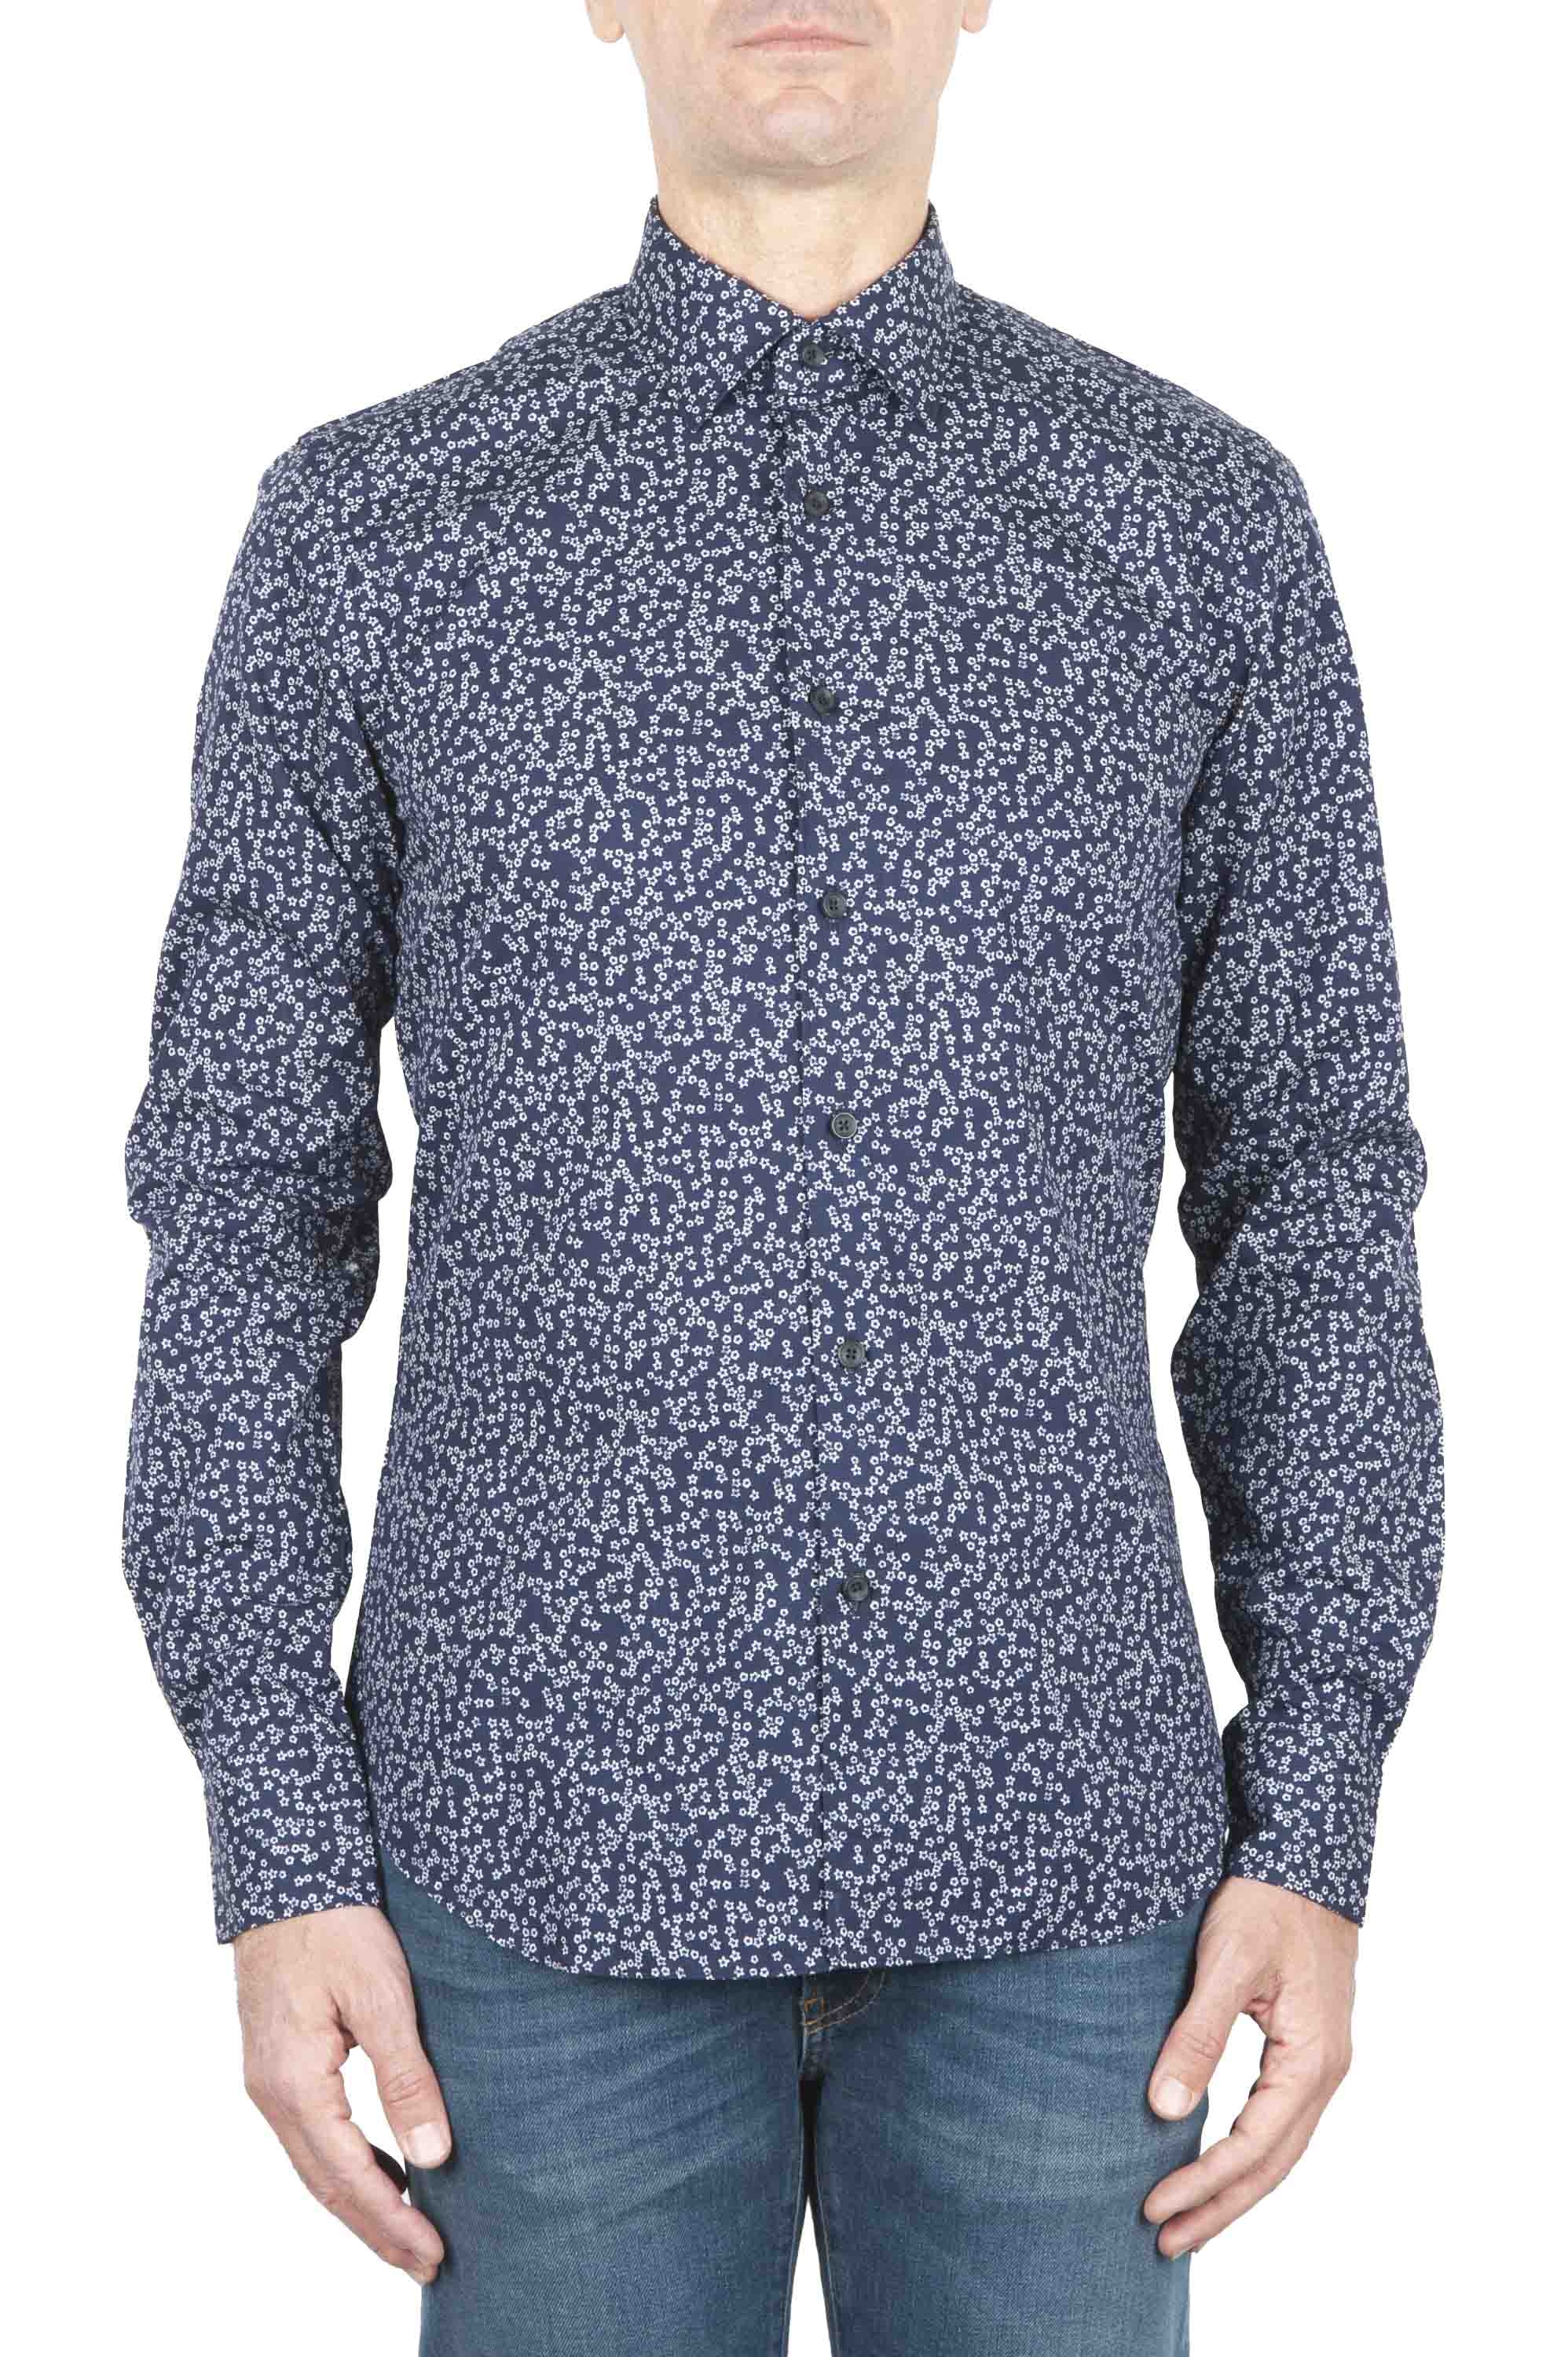 SBU 01591 Geometric printed pattern blue cotton shirt 01